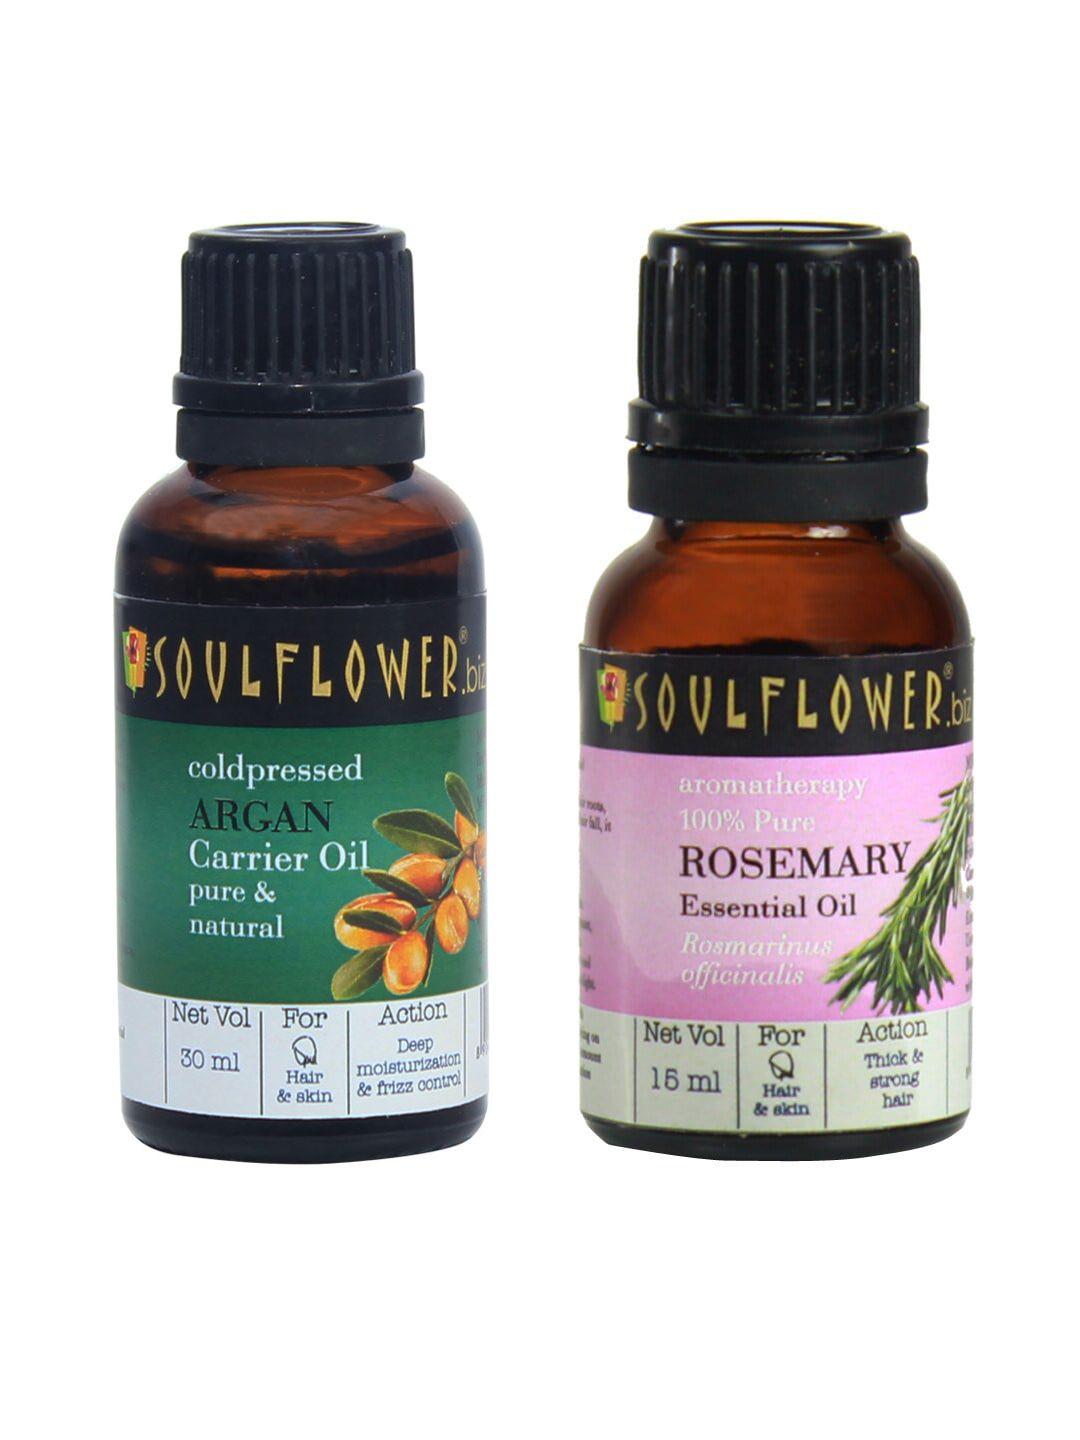 soulflower set of rosemary essential oil 15ml & coldpressed argan carrier oil 30ml